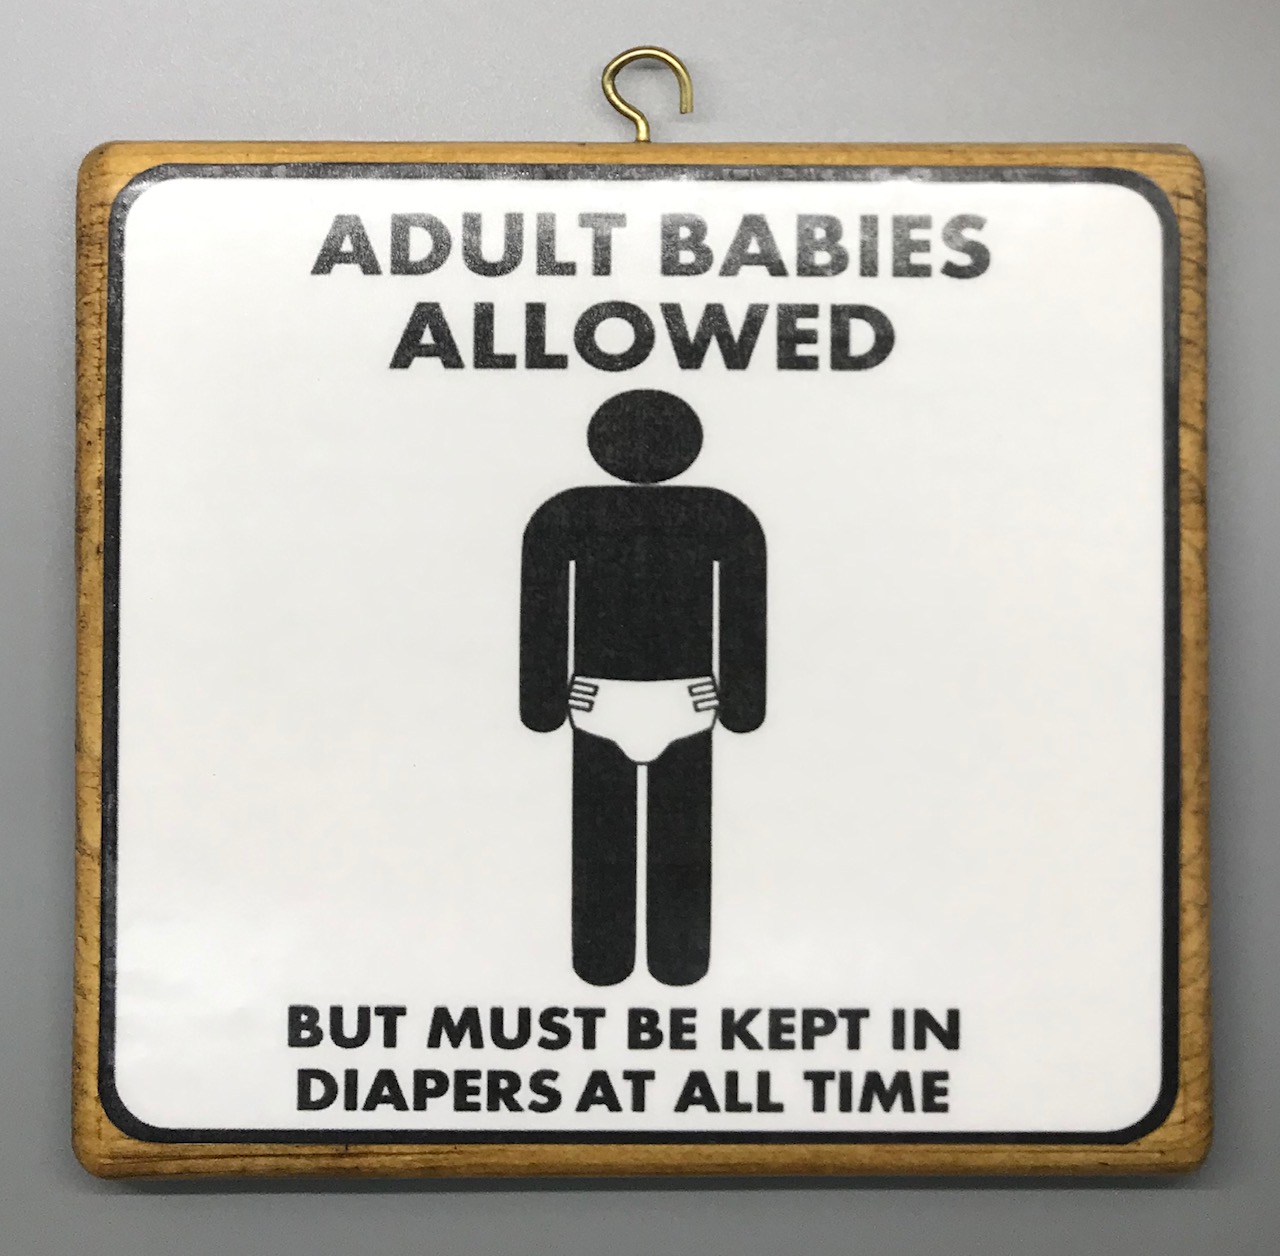 Adult Babies Allowed Plaque - Boy Version